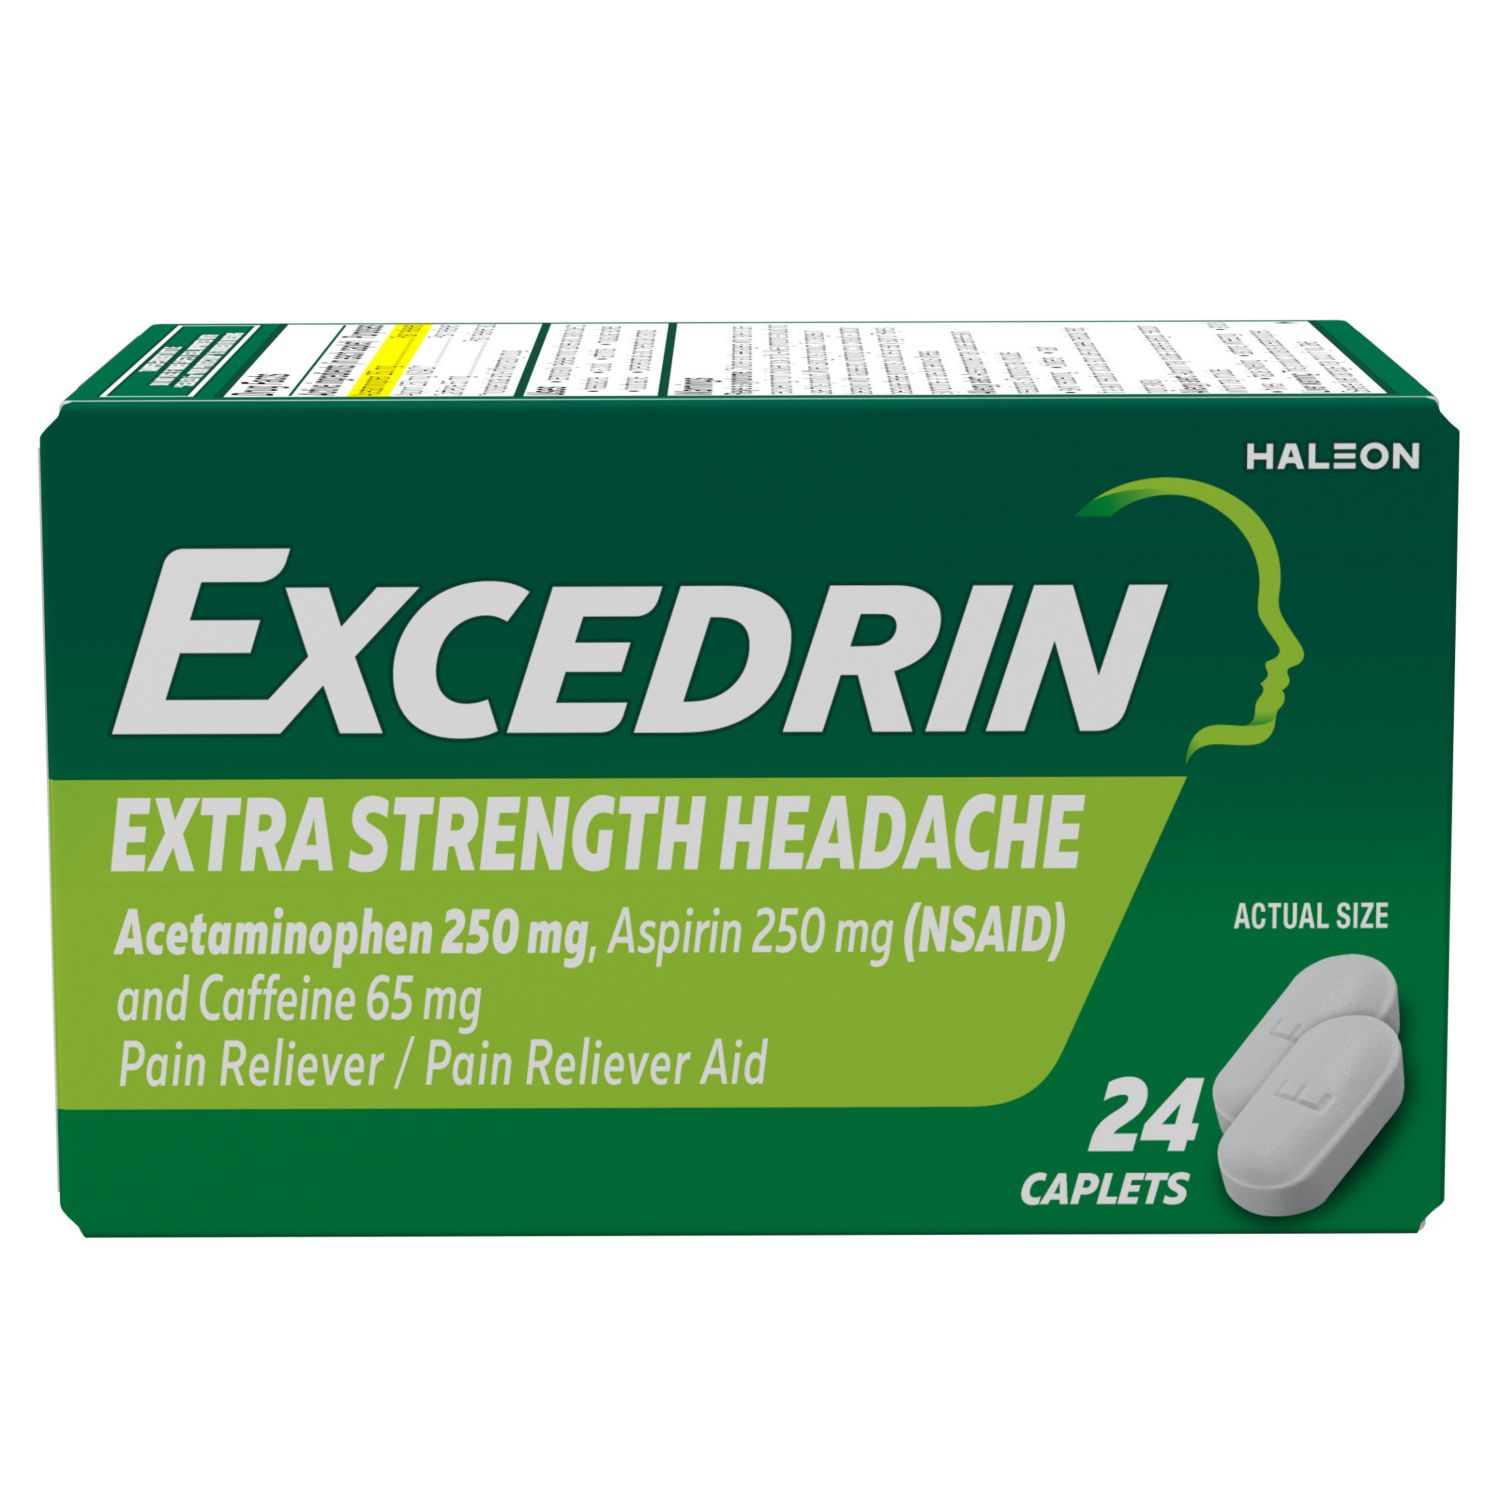 Excedrin Extra Strength Headache Pain Relief Caplets